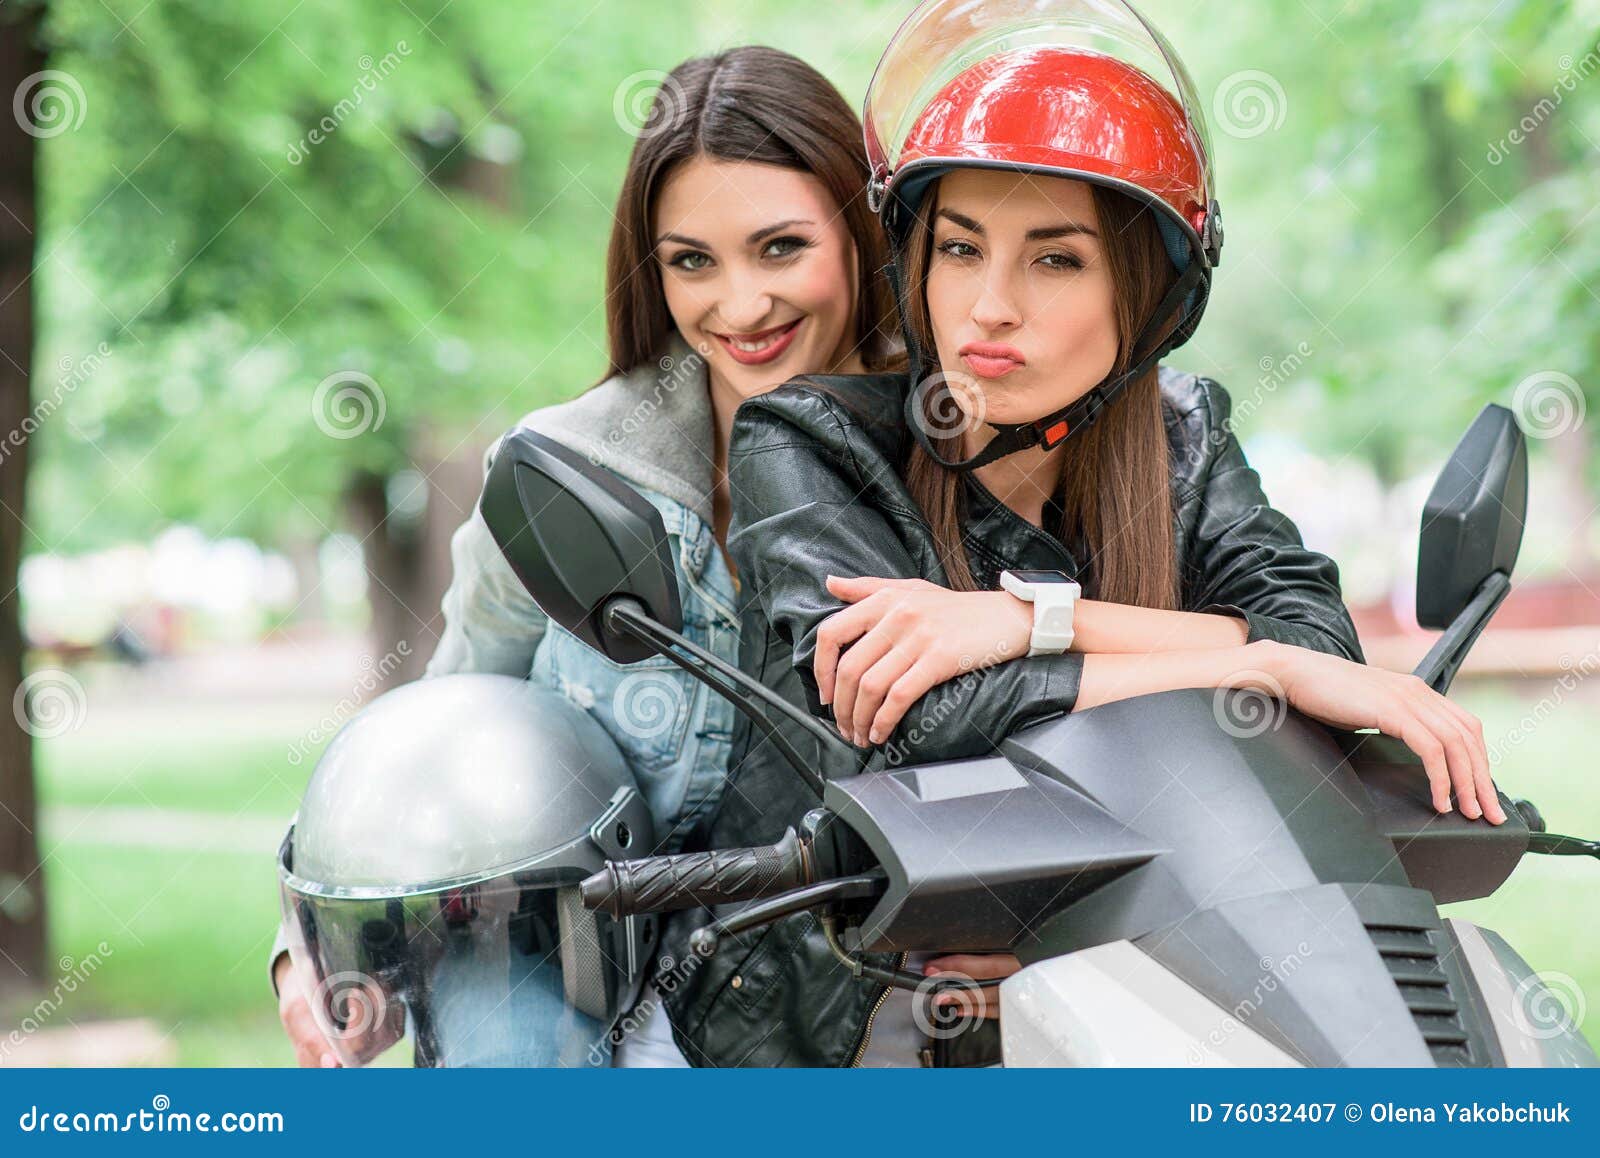 Lesbian Face Riding